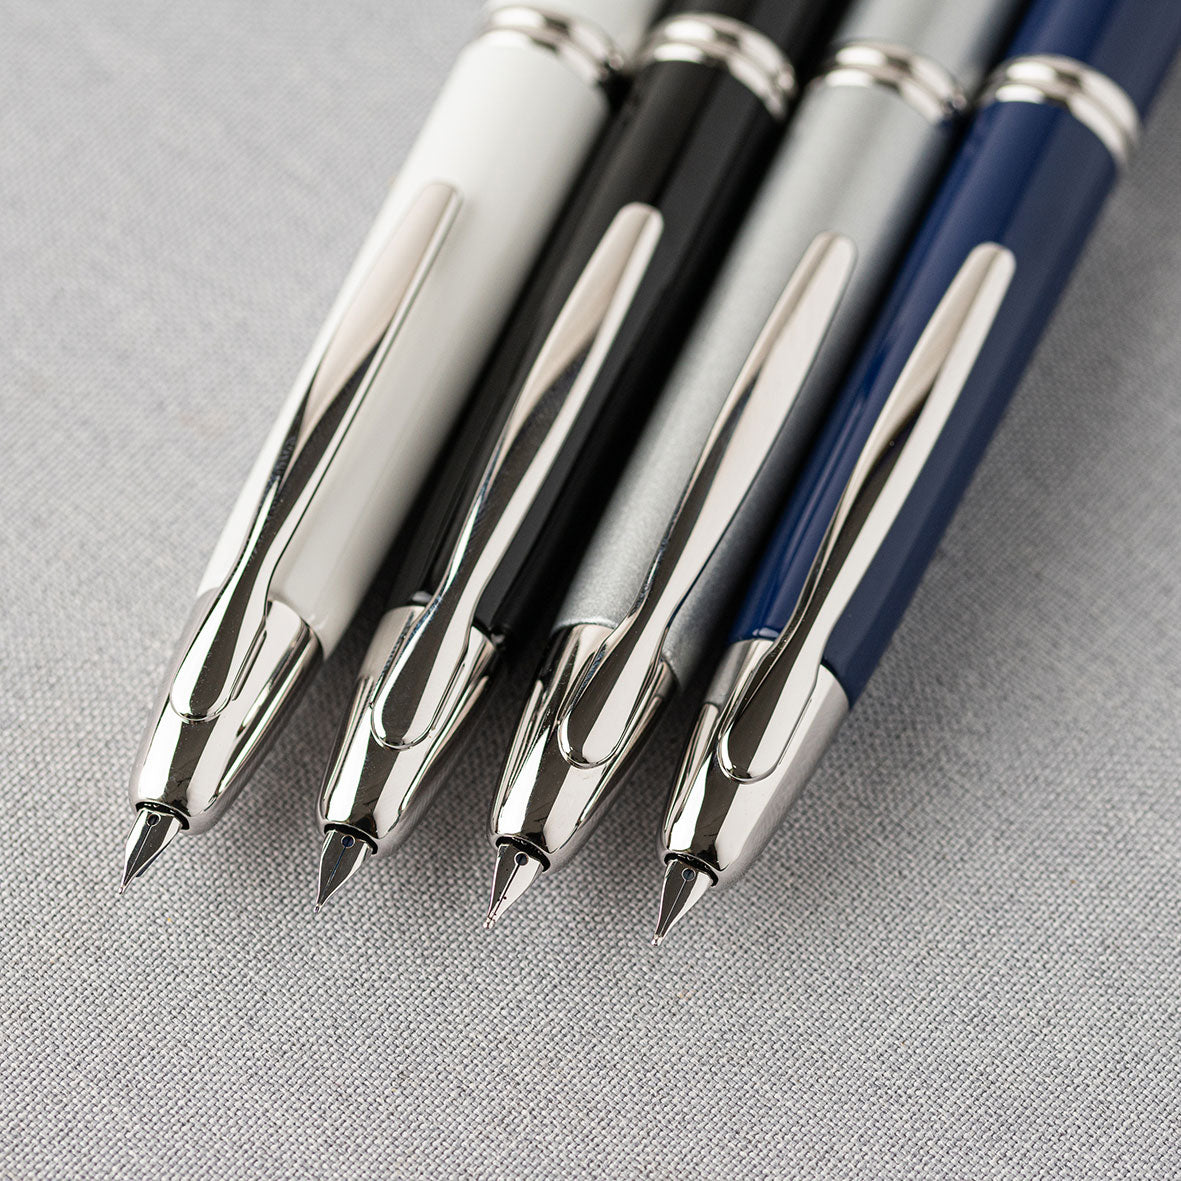 Pilot - Fountain Pen - Capless - Blue (Silver Trim)